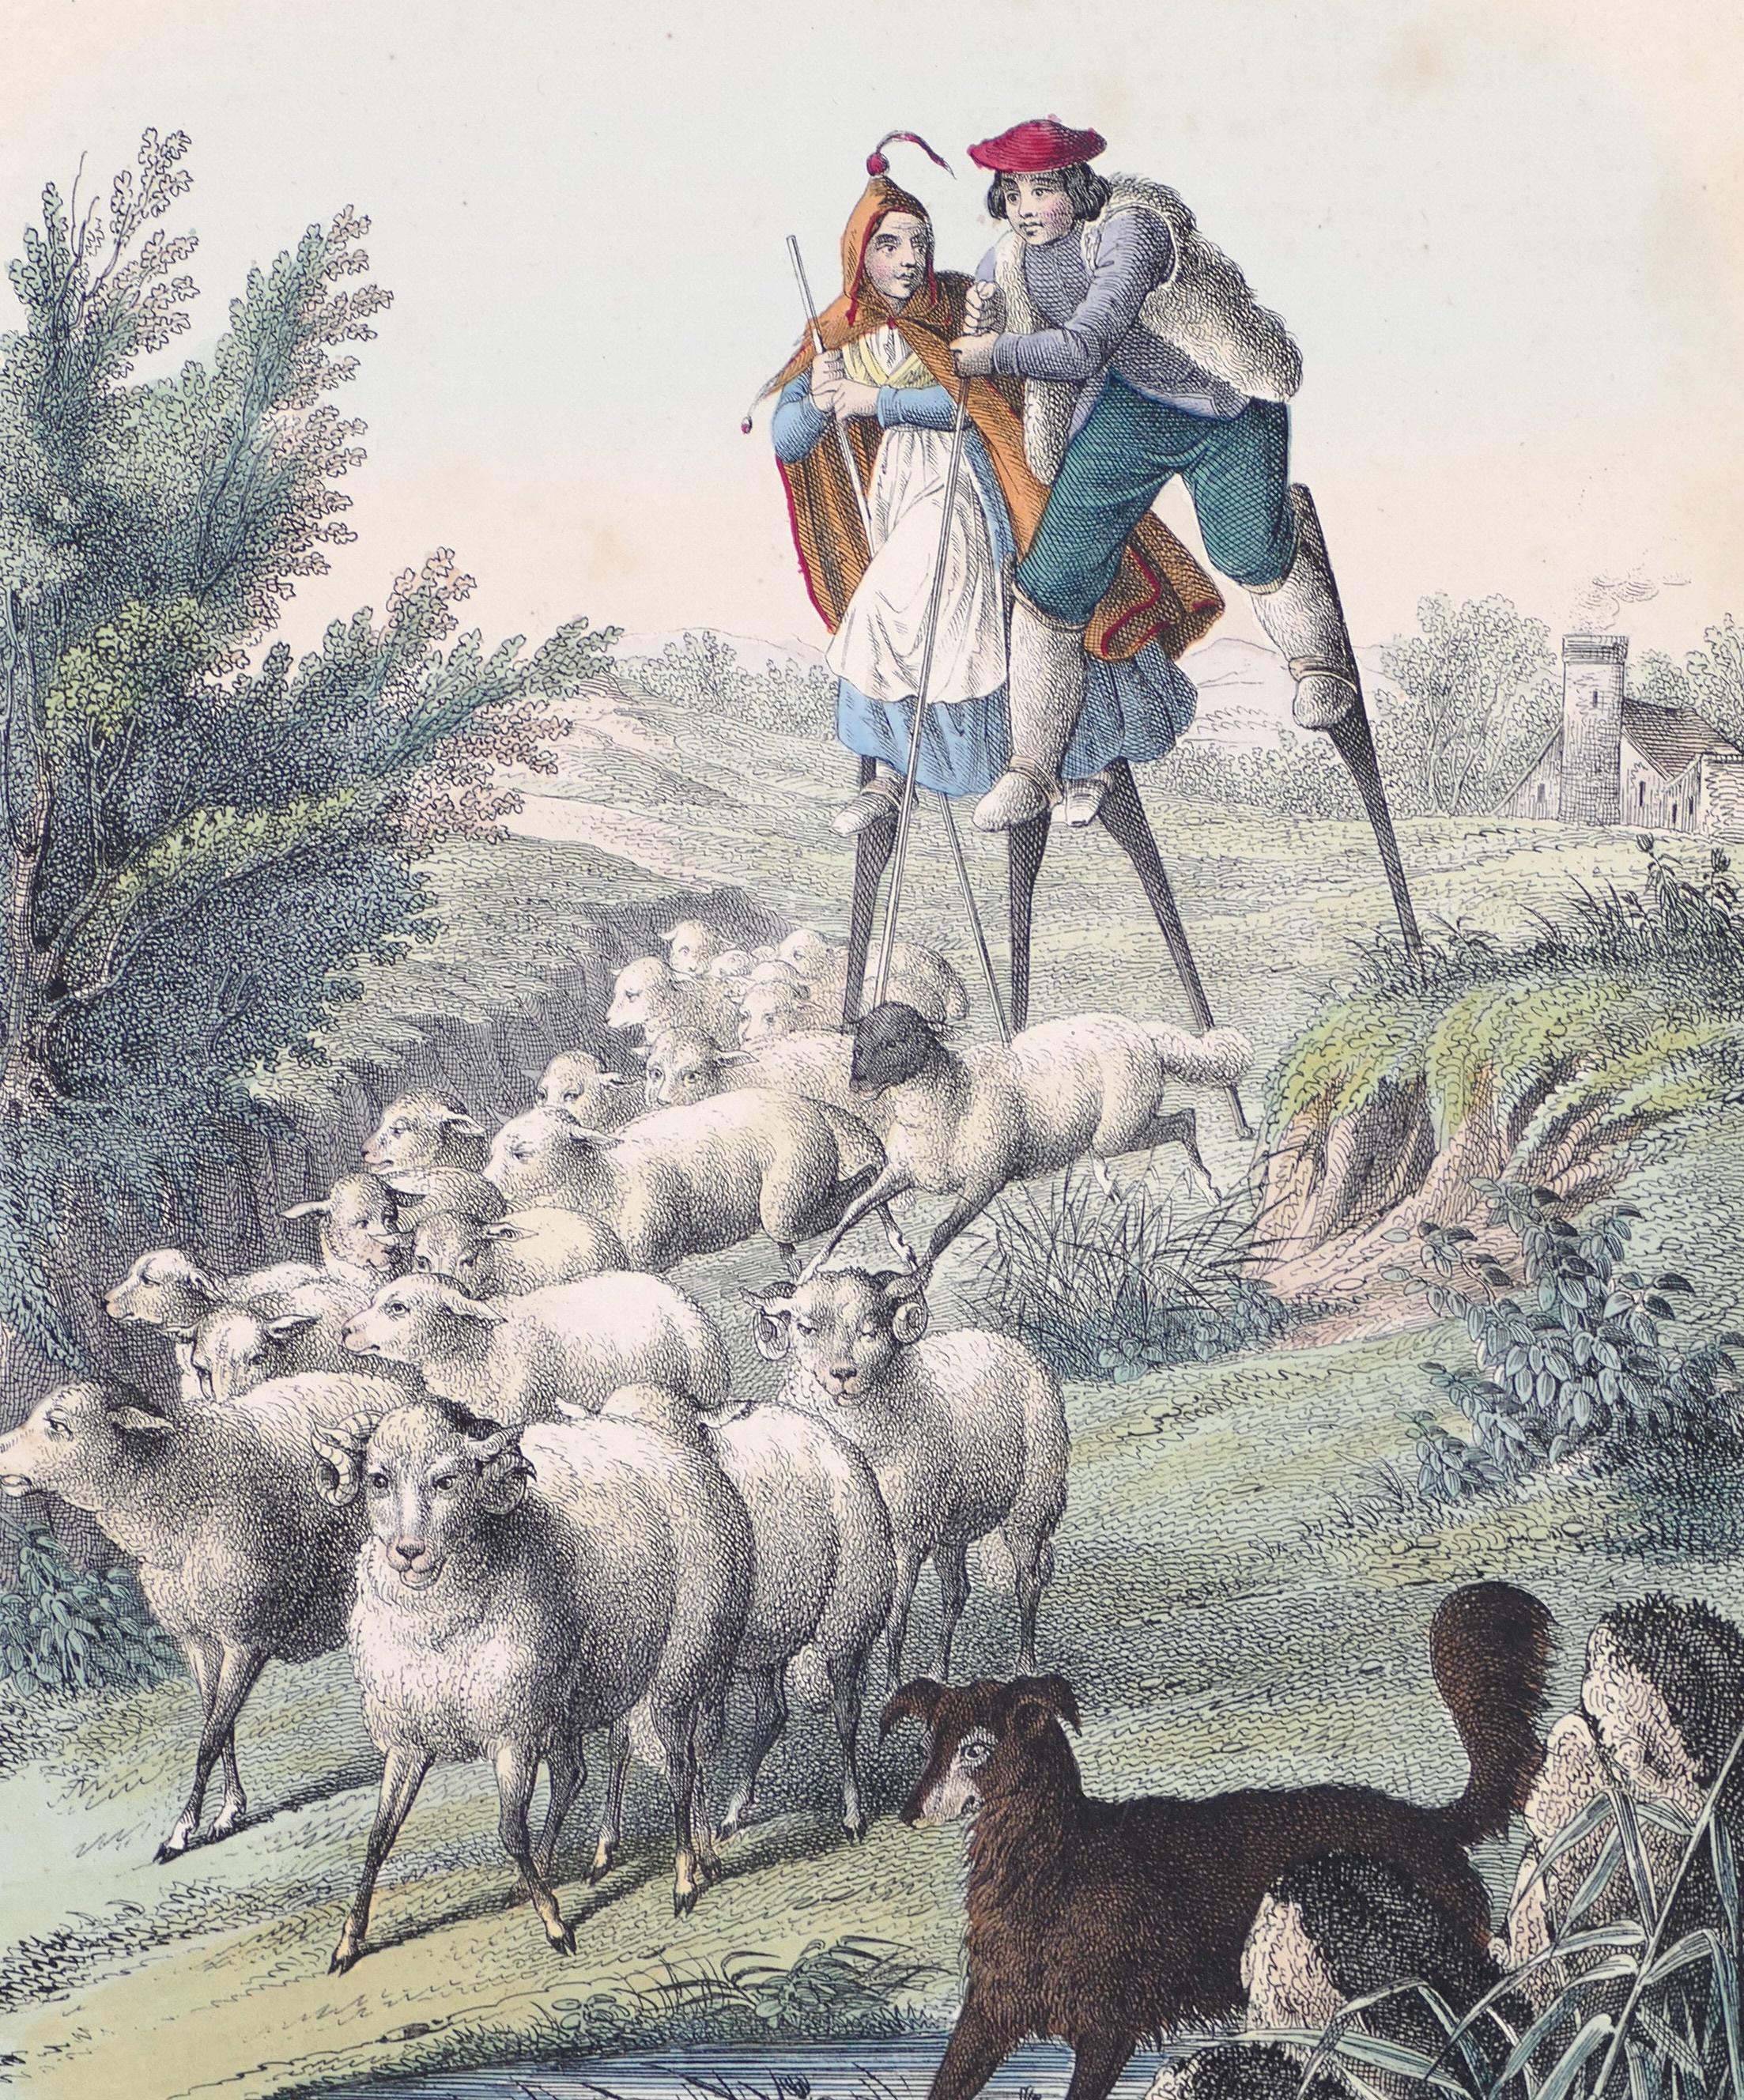 Stilt-Walking Shepherds - Original Lithograph - 1860 - Print by Unknown